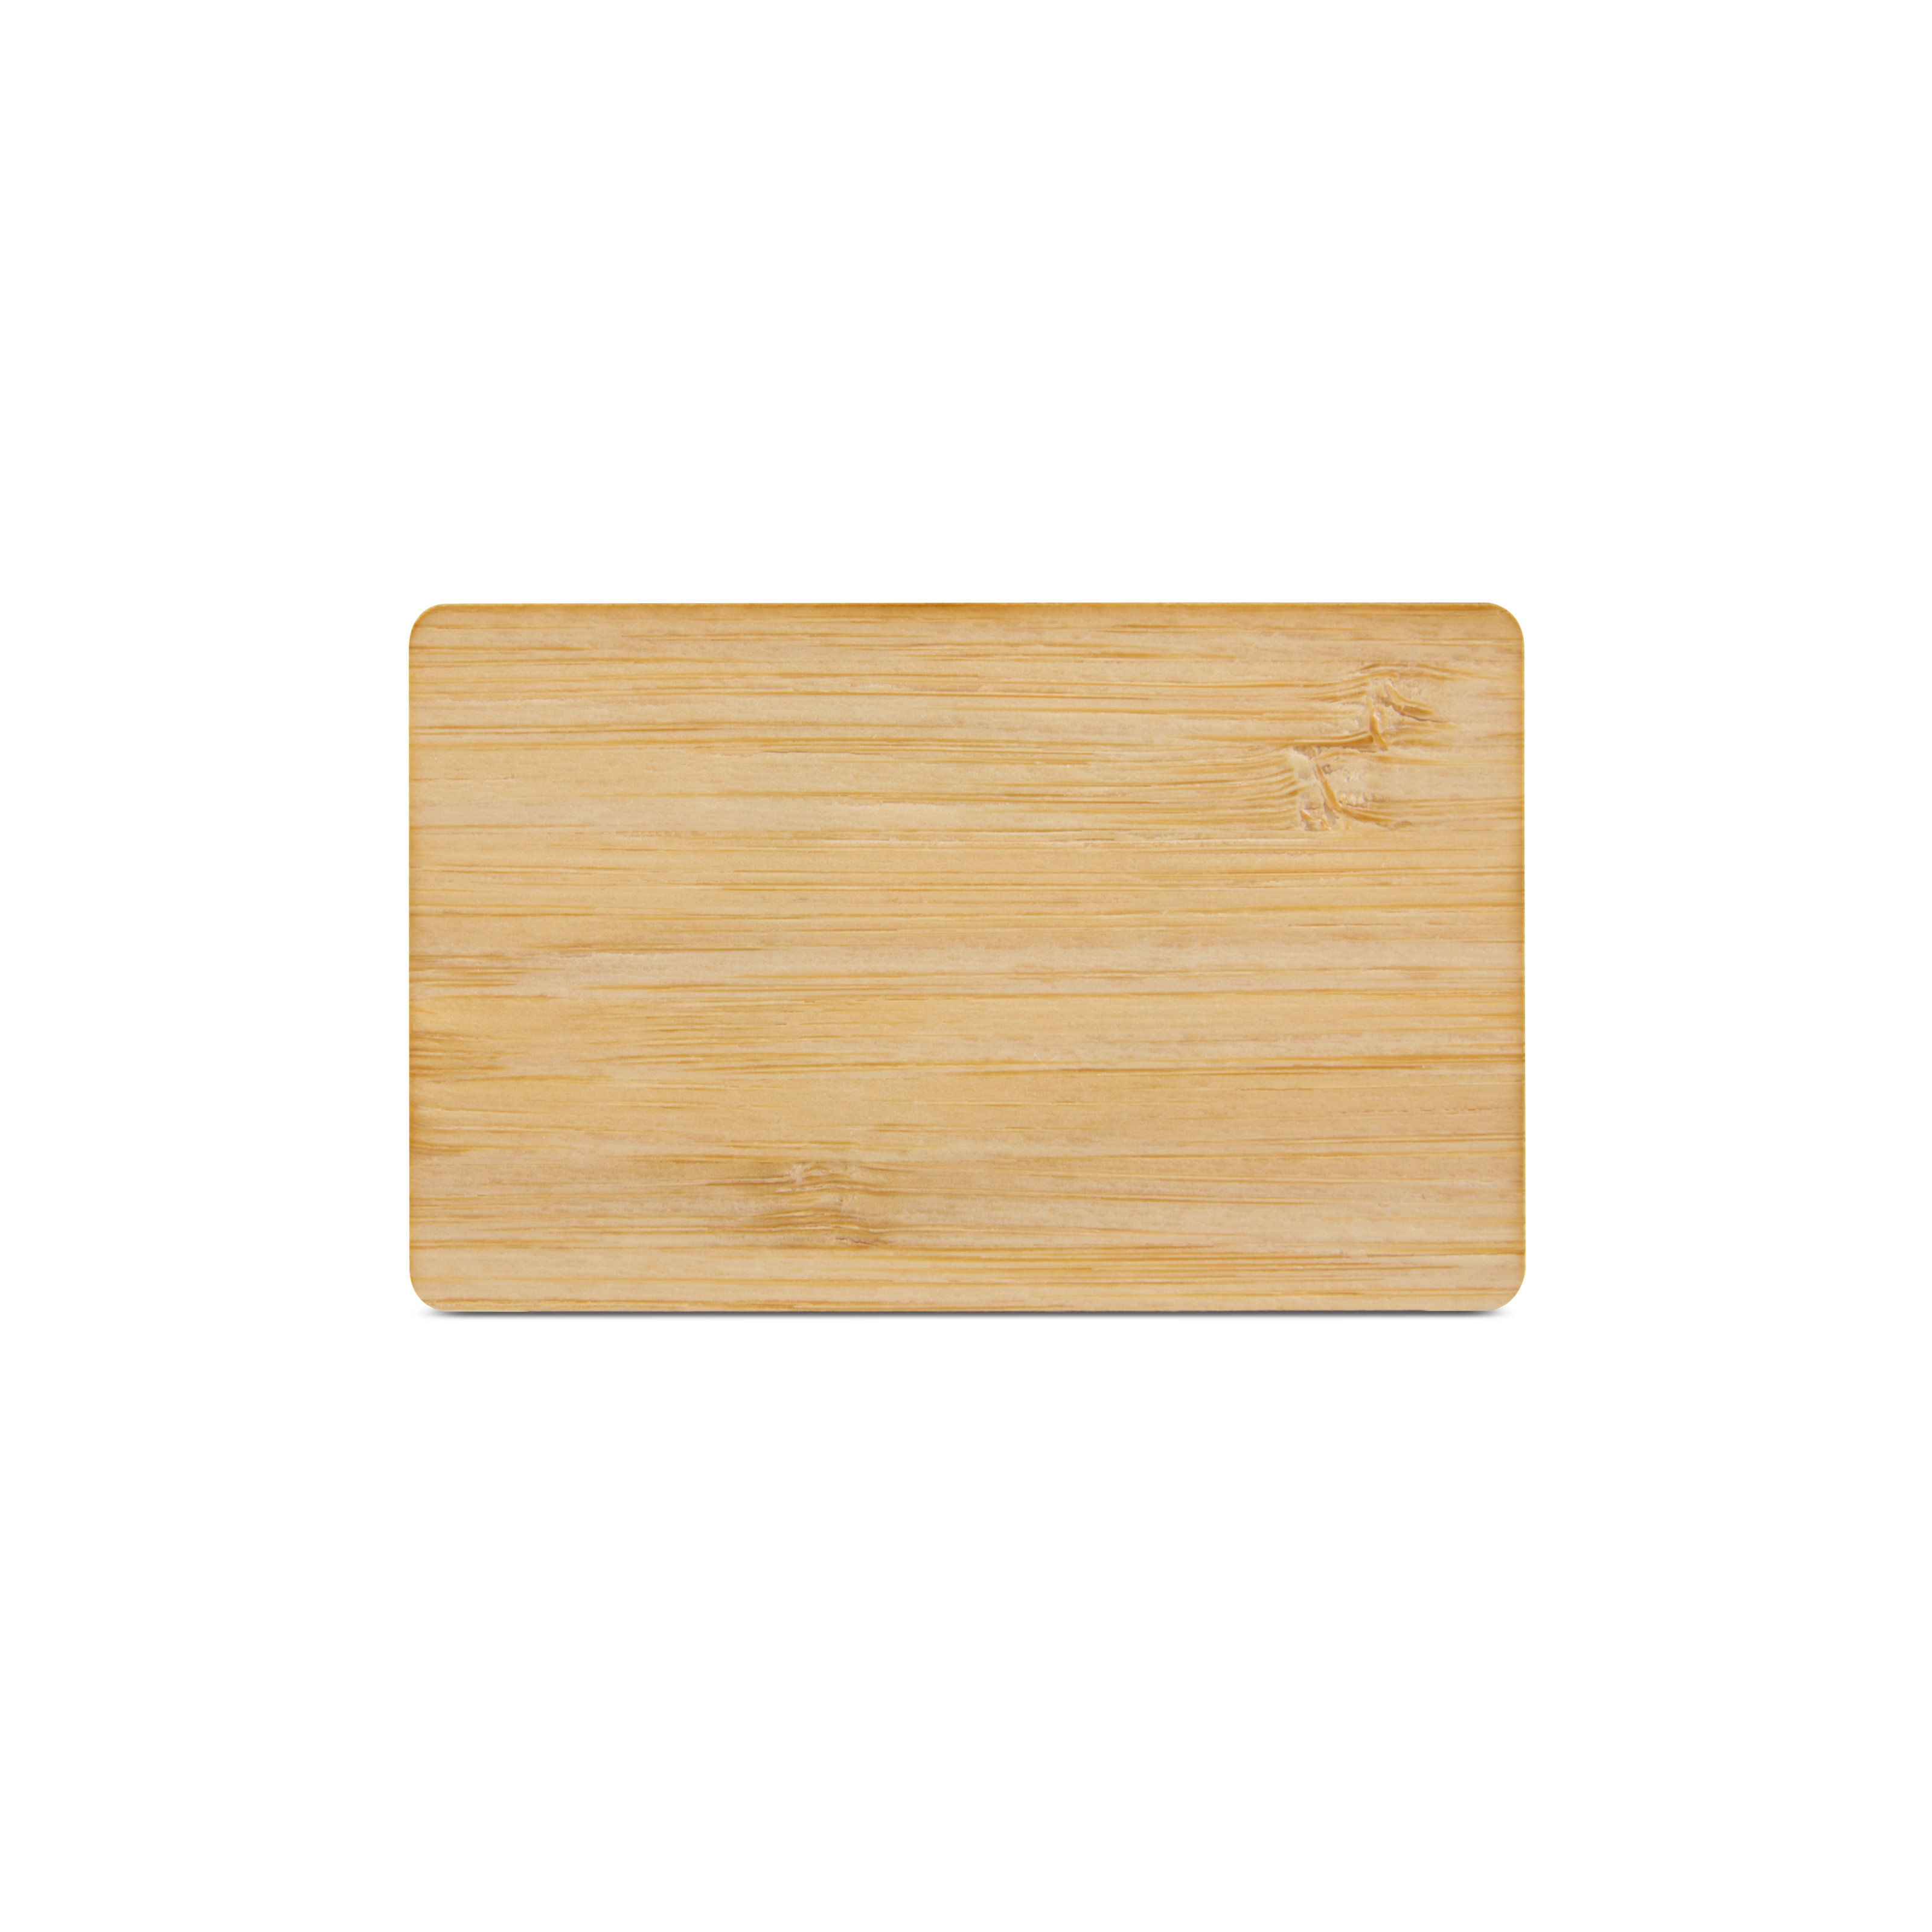 NFC card Bamboo - 85,6 x 54 mm - NTAG213 - 180 Byte - wood look